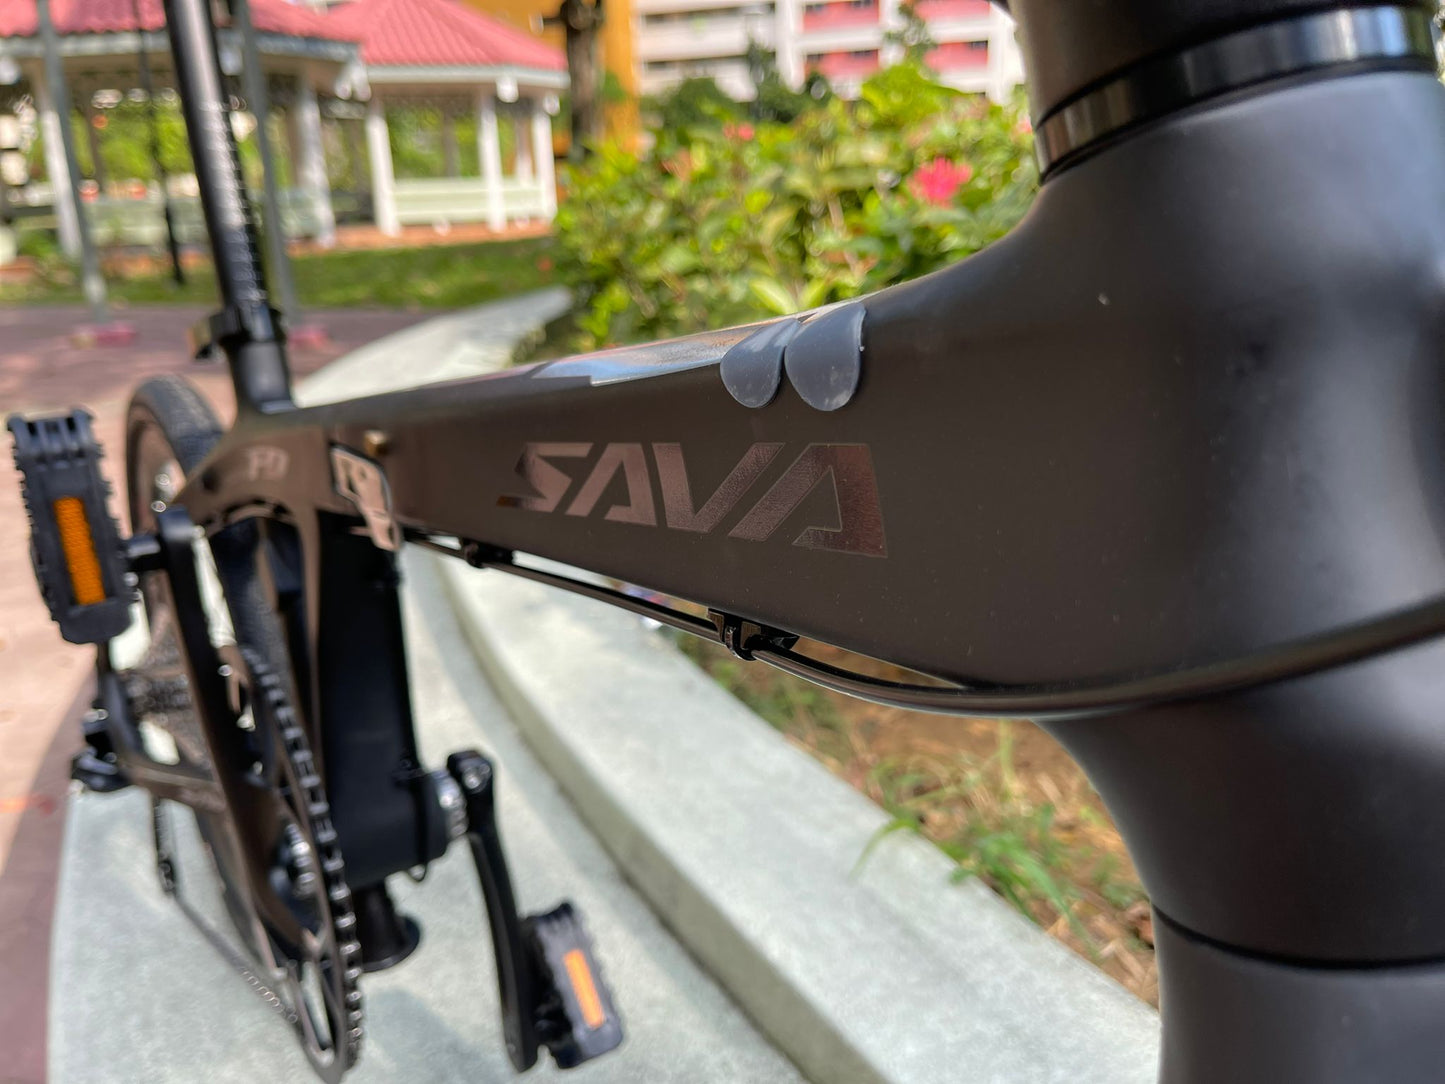 Sava Z1 Carbon Fiber 20" Bicycle Black / Grey